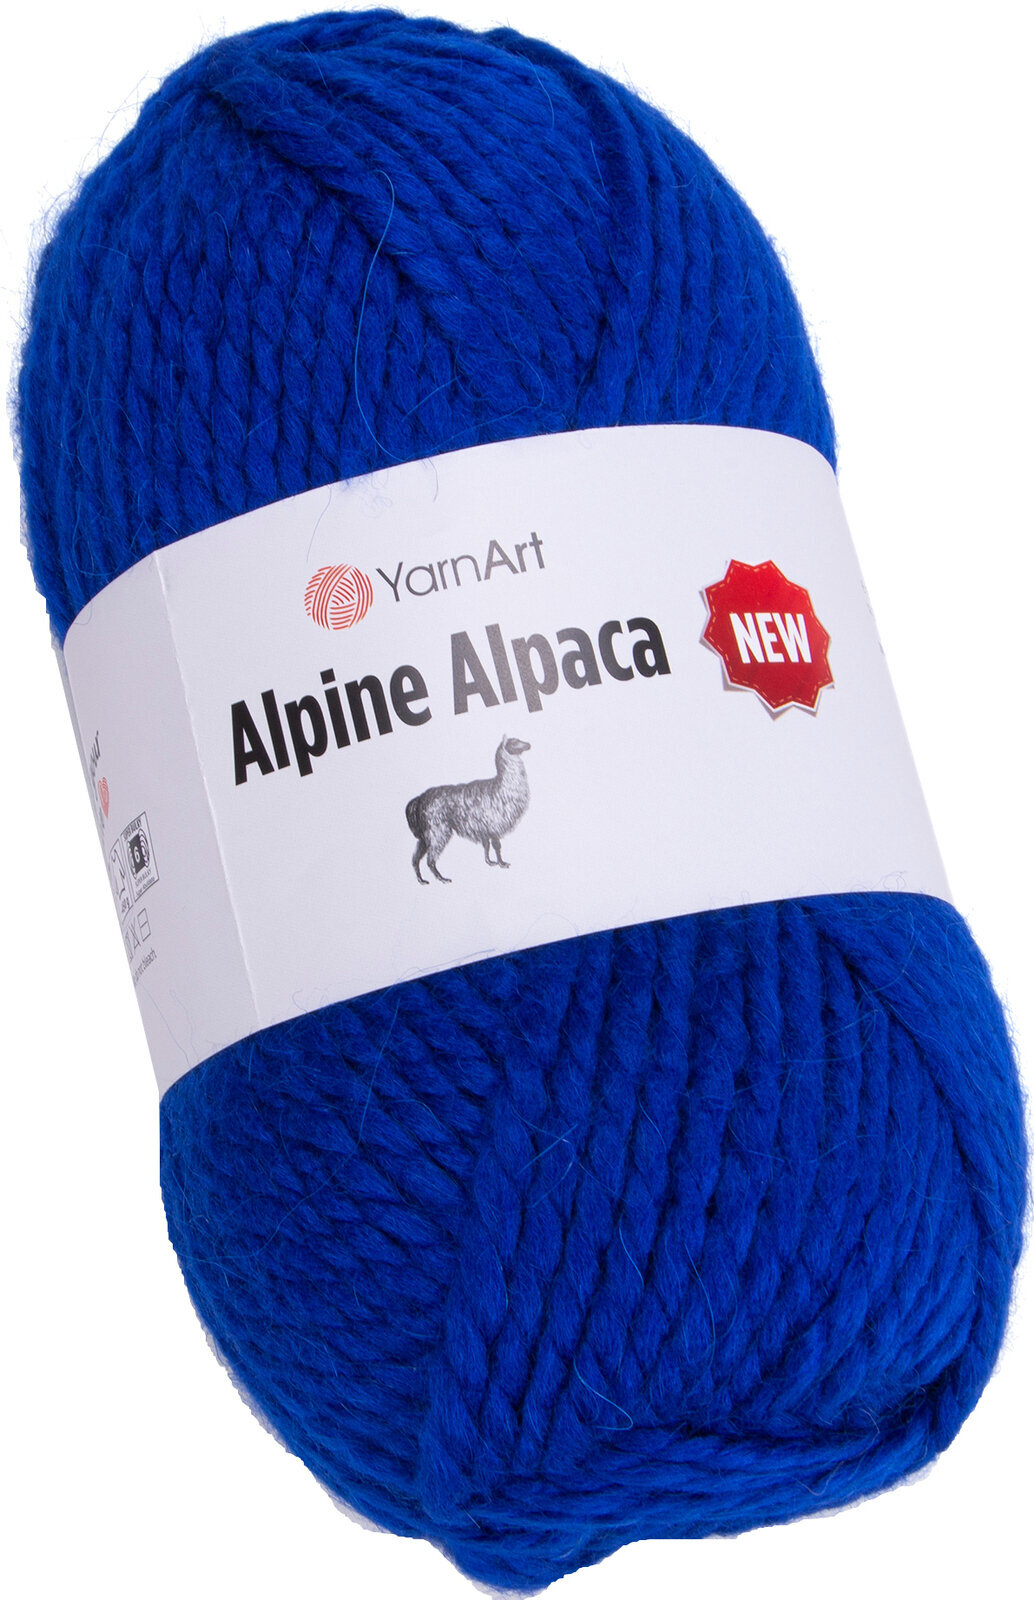 Knitting Yarn Yarn Art Alpine Alpaca New 1442 Knitting Yarn